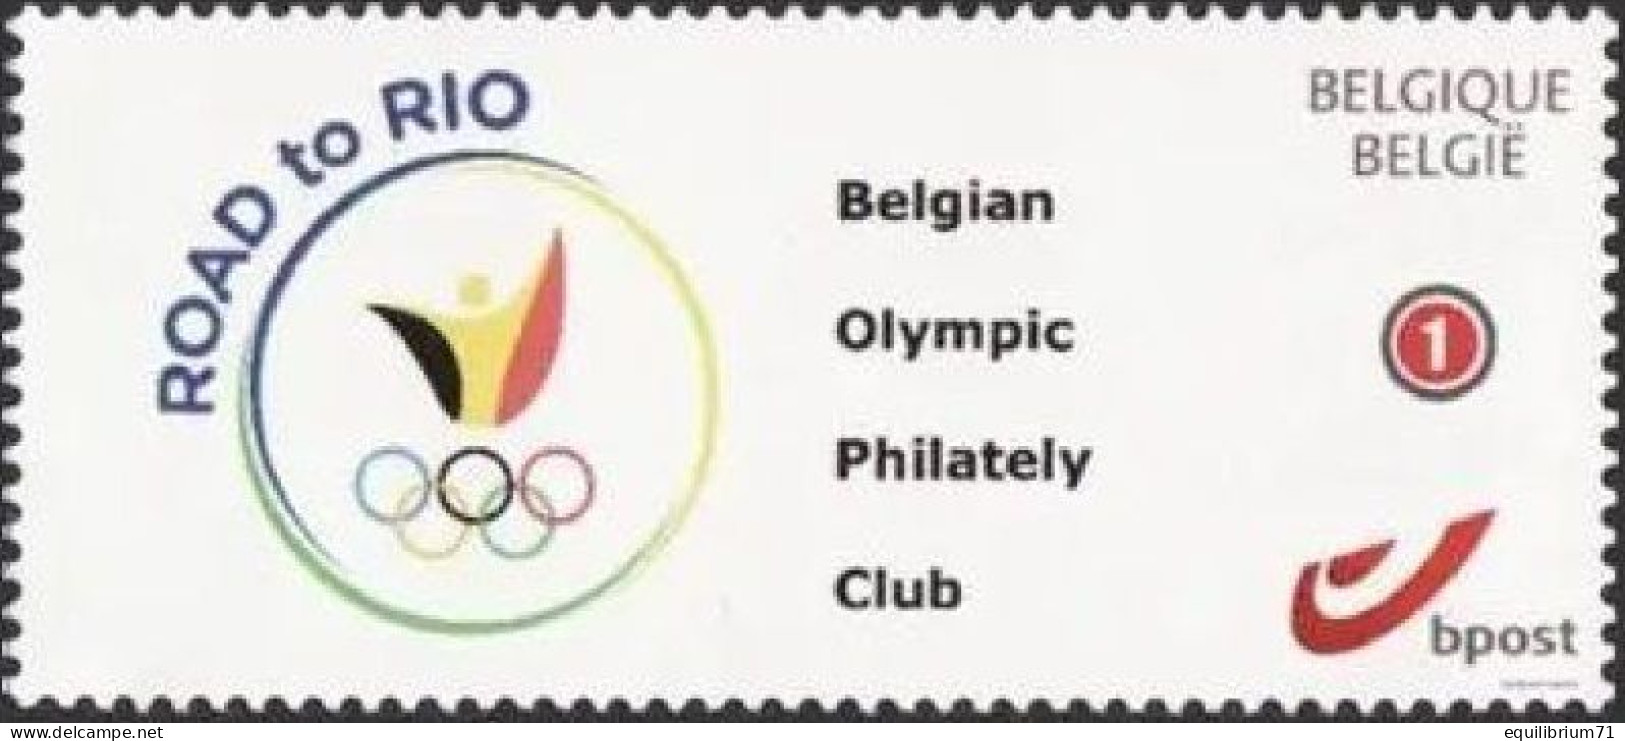 DUOSTAMP** / MYSTAMP** - Belgian Olympic Philately Club - BOPC - ROAD TO TOKYO - Verano 2020 : Tokio